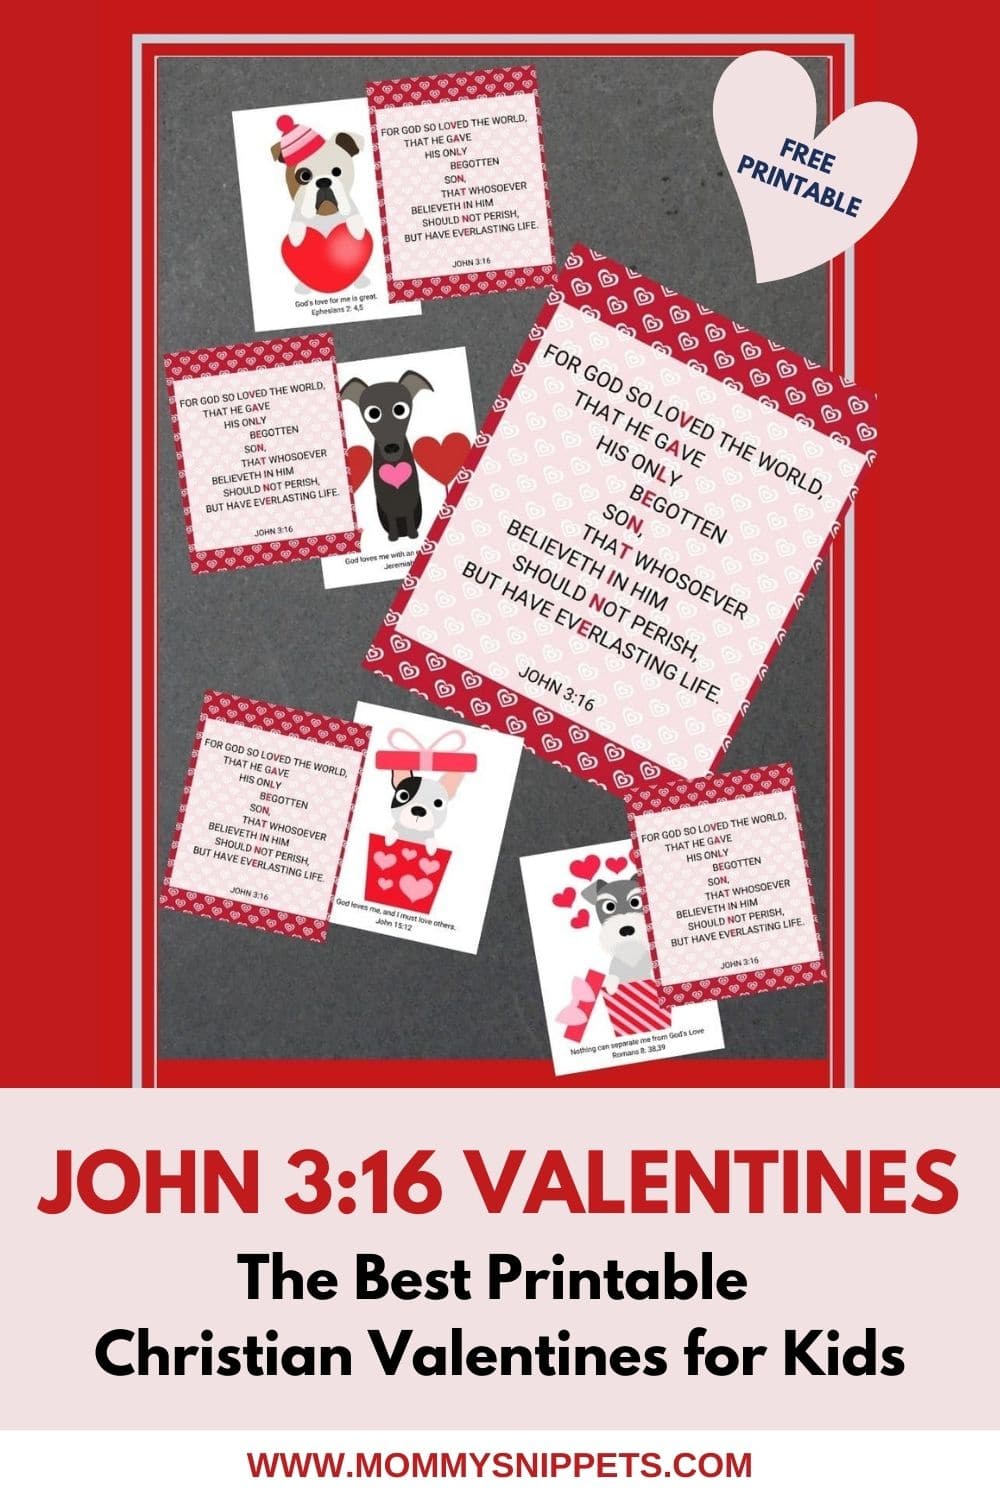 John 316 Valentines- The Best Printable Christian Valentines for Kids